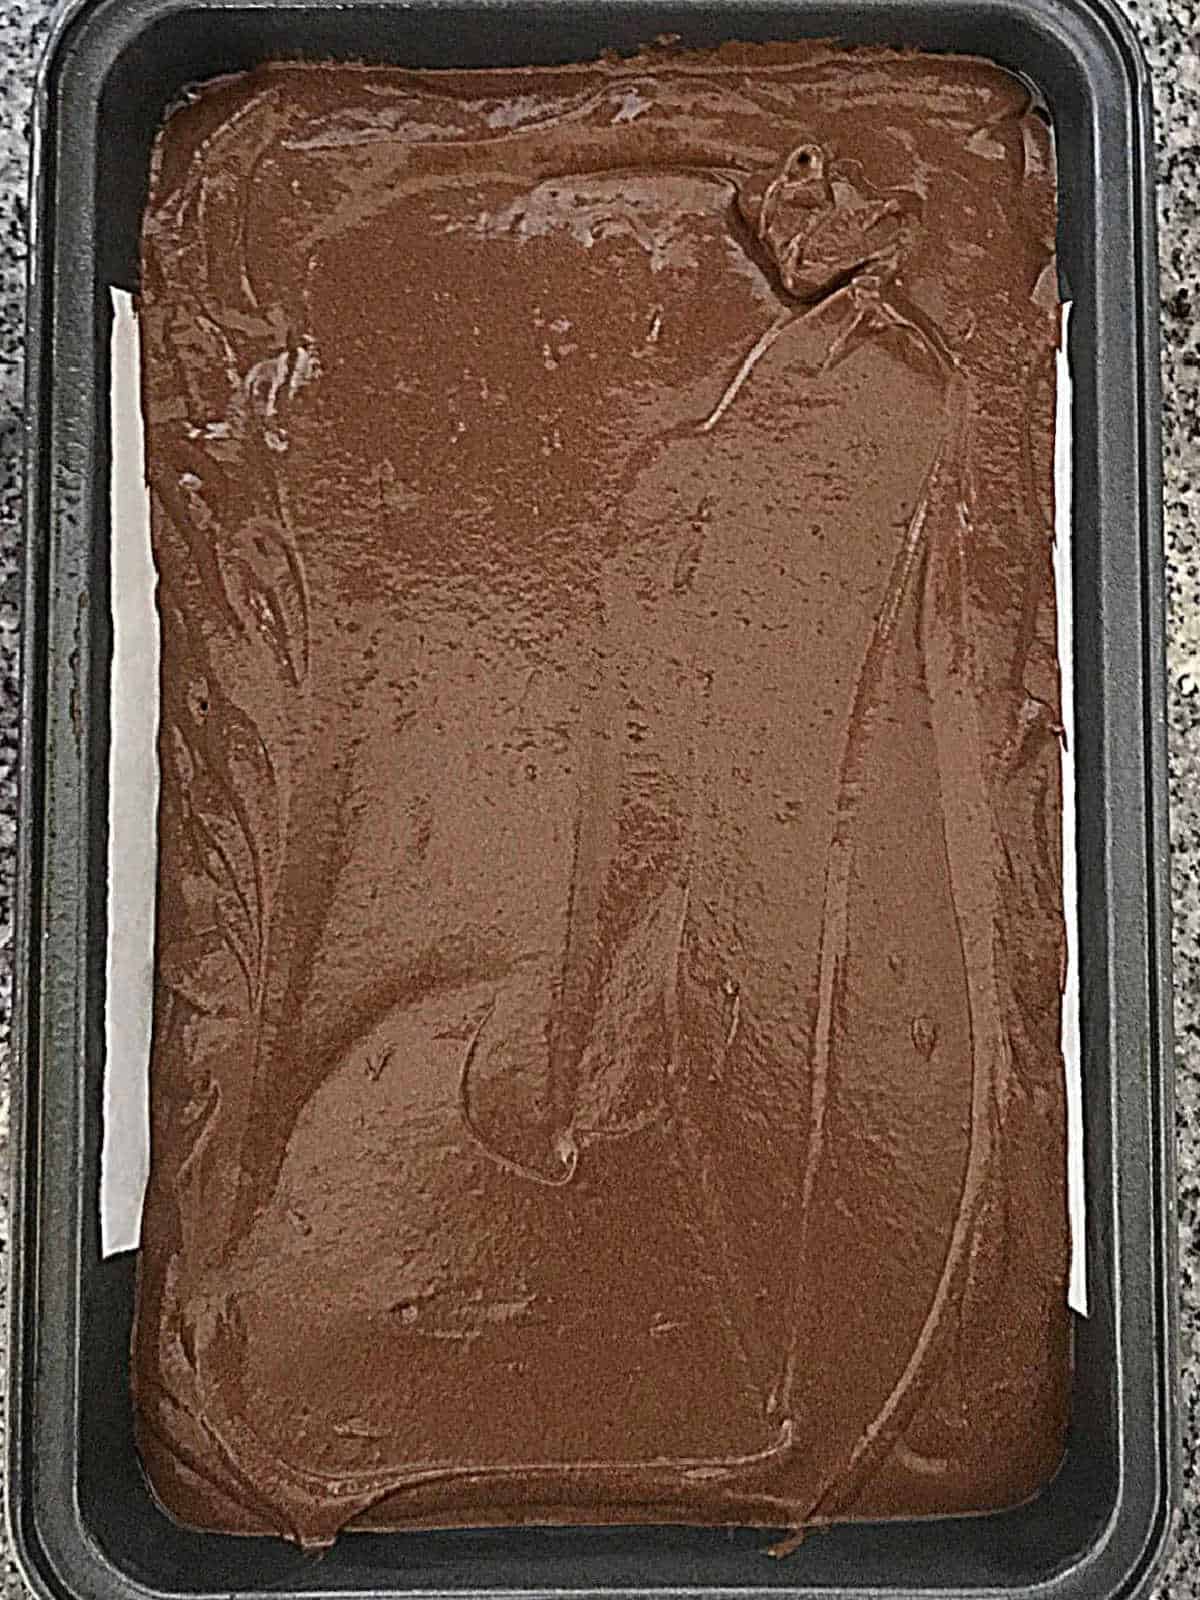 Top view of chocolate cake before baking in a metal rectangular pan.